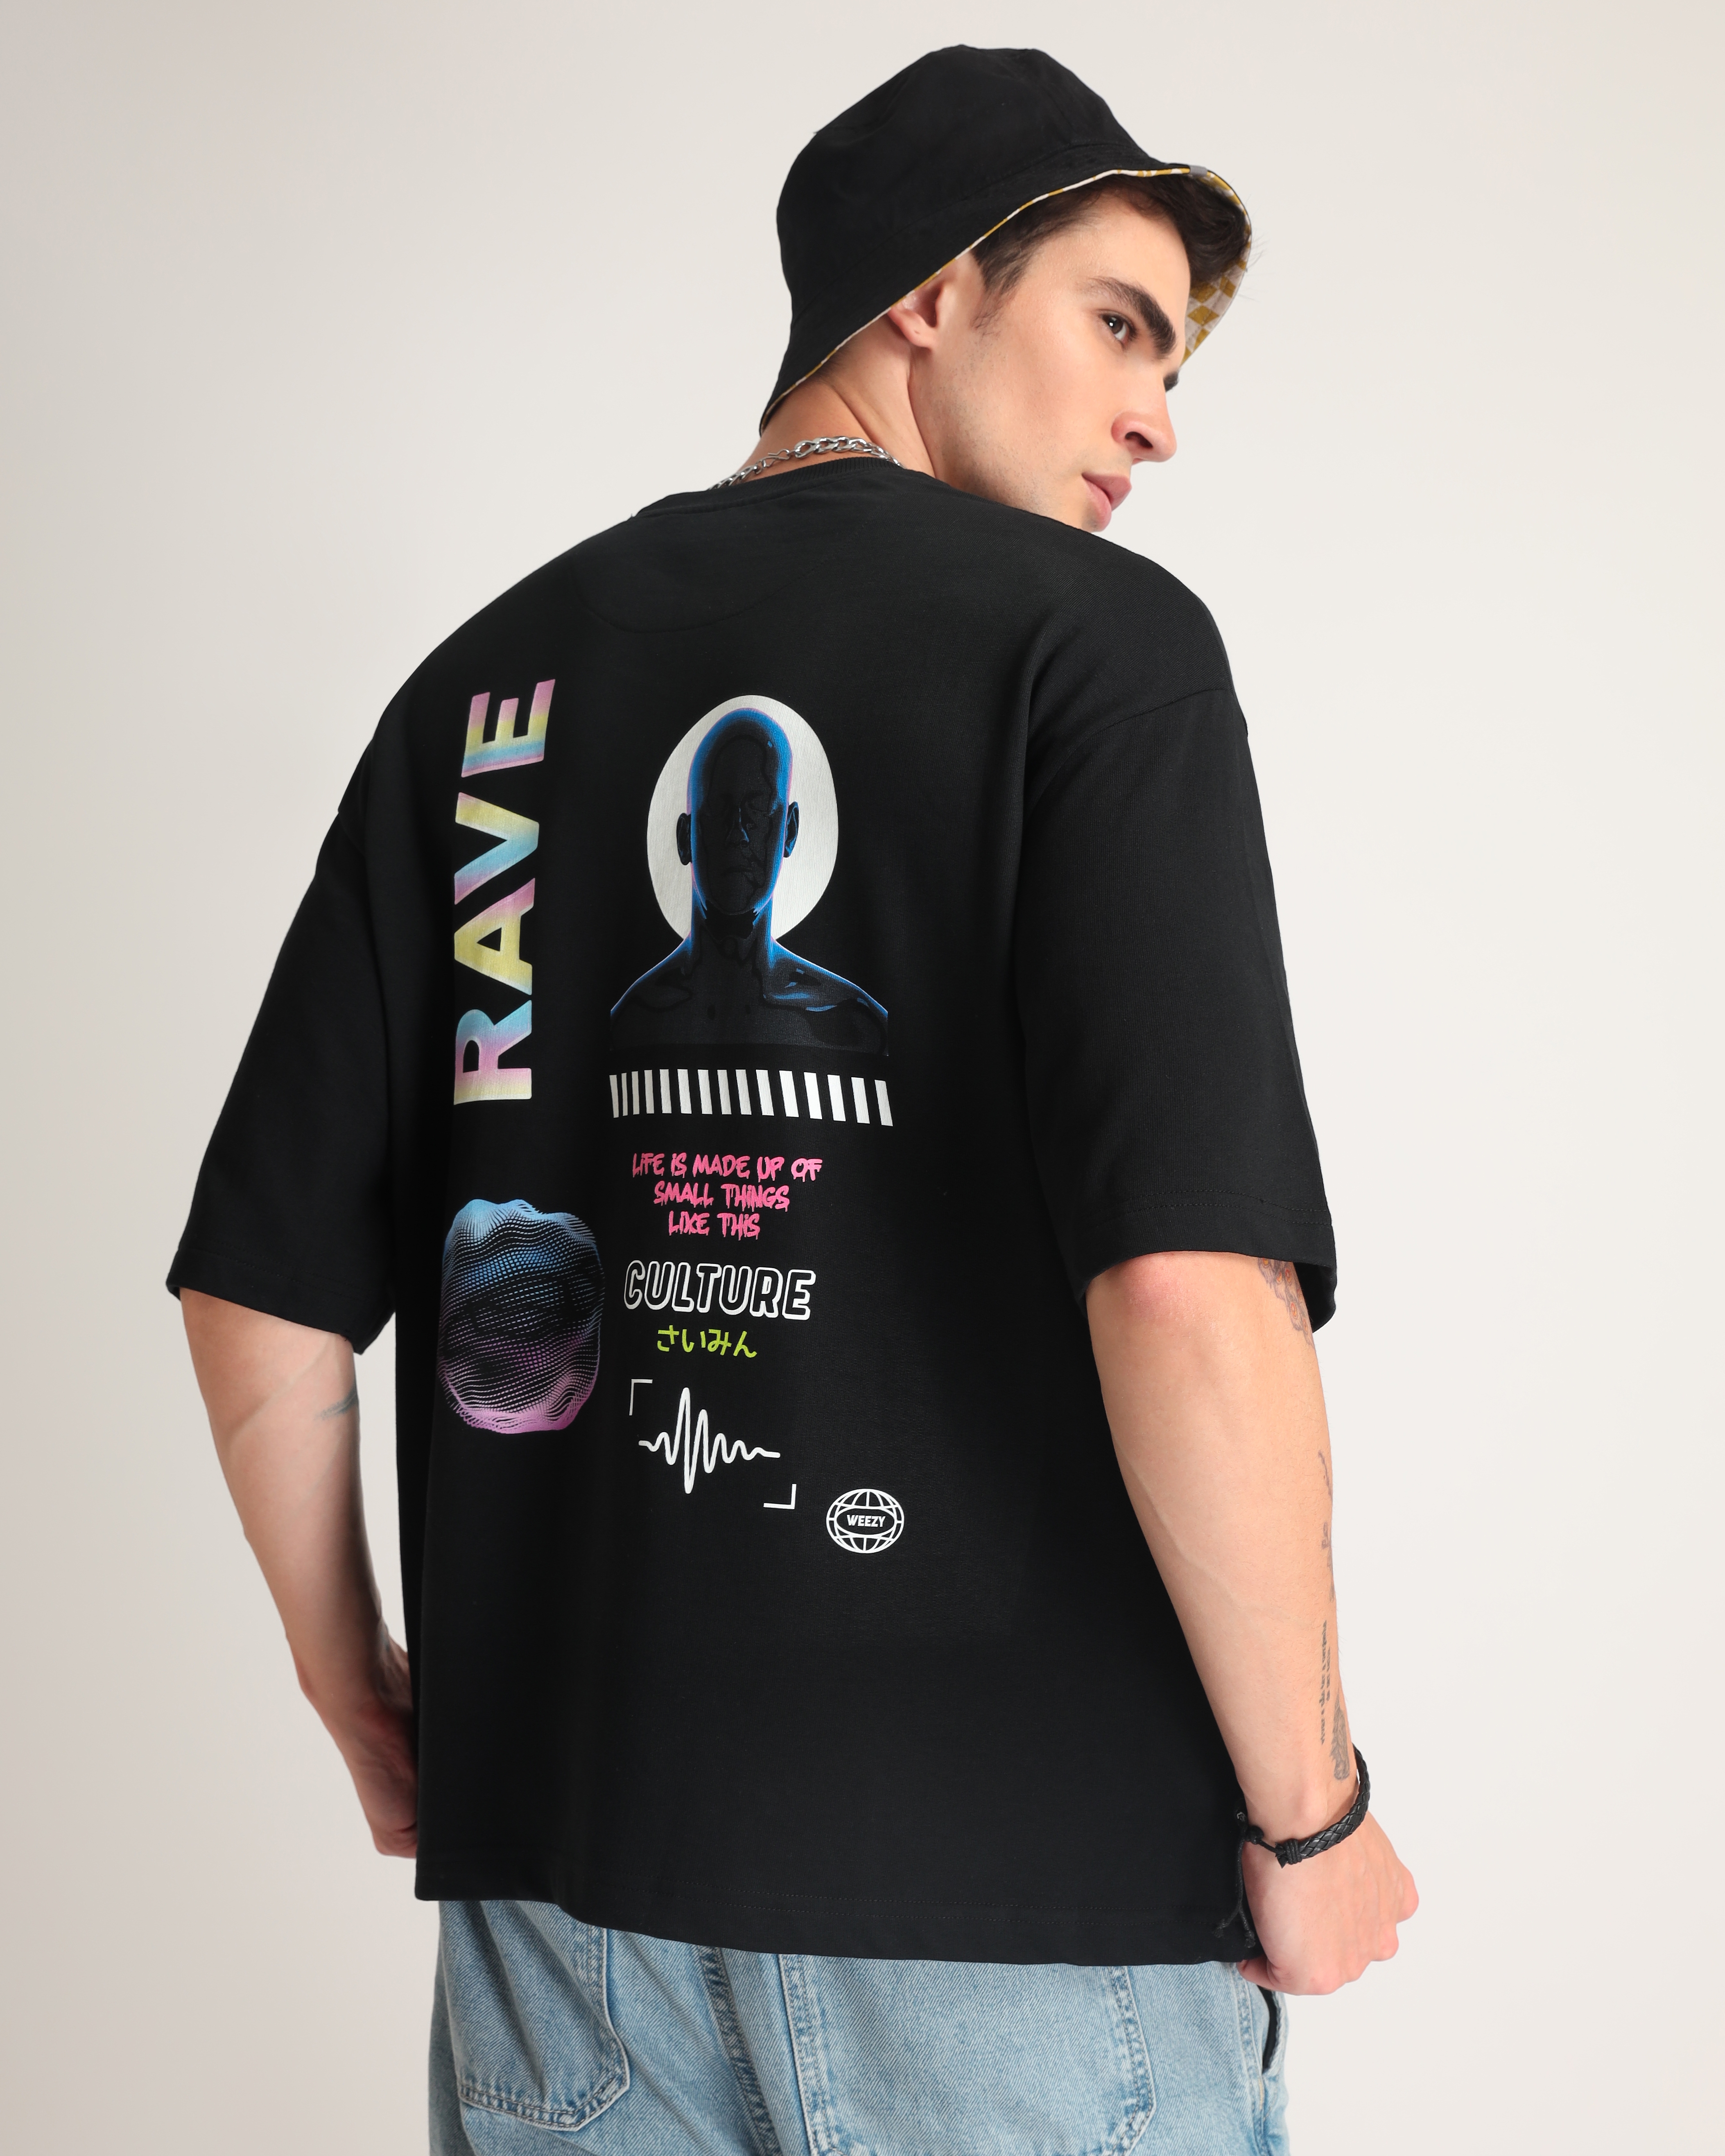 Weezy Streetwear | Men's Black Printed Oversized T-Shirt